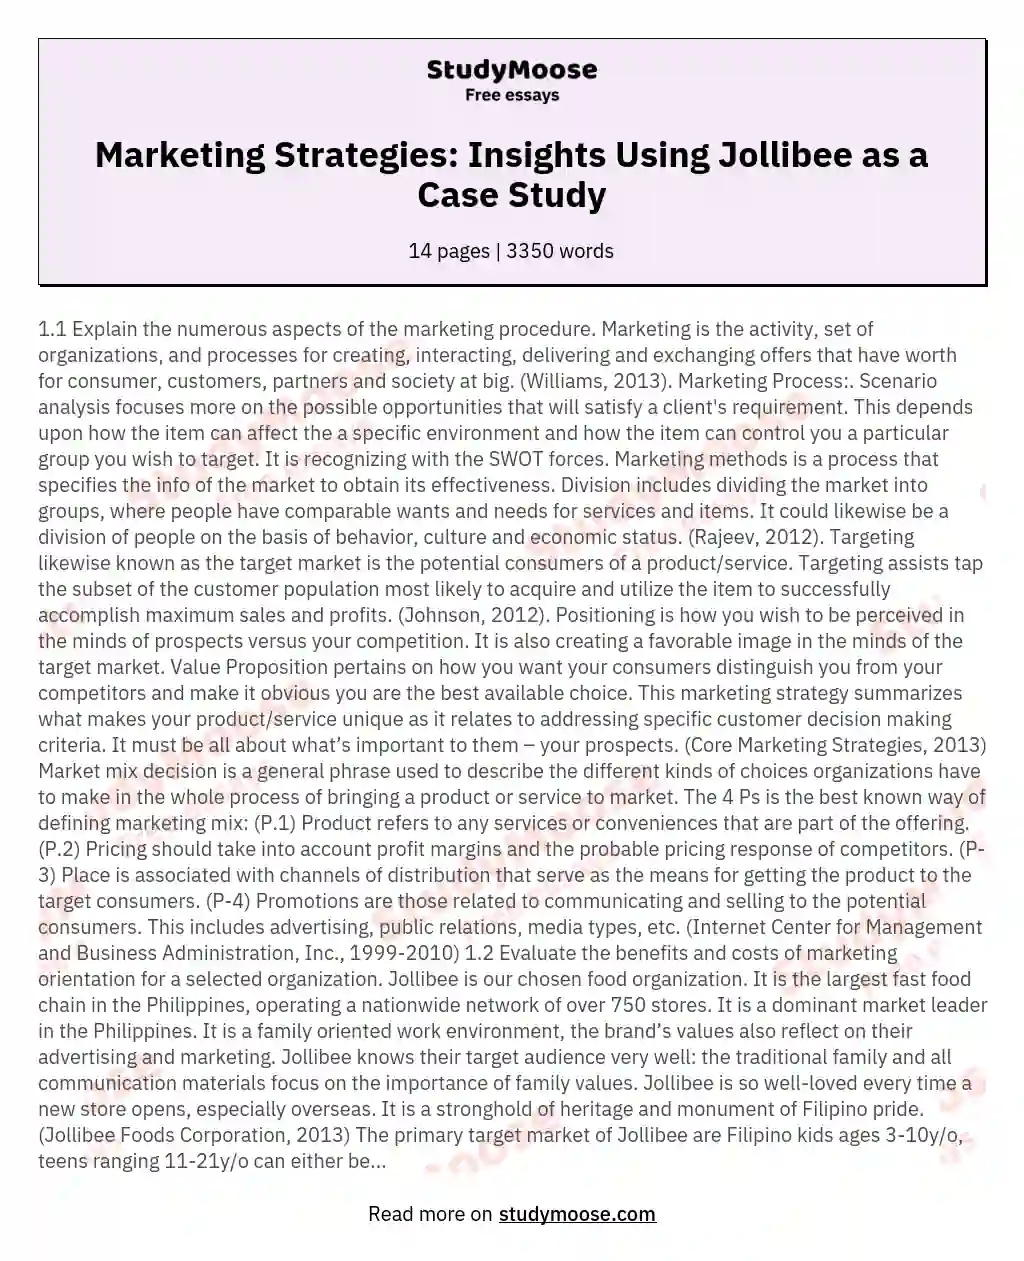 Marketing Strategies: Insights Using Jollibee as a Case Study essay